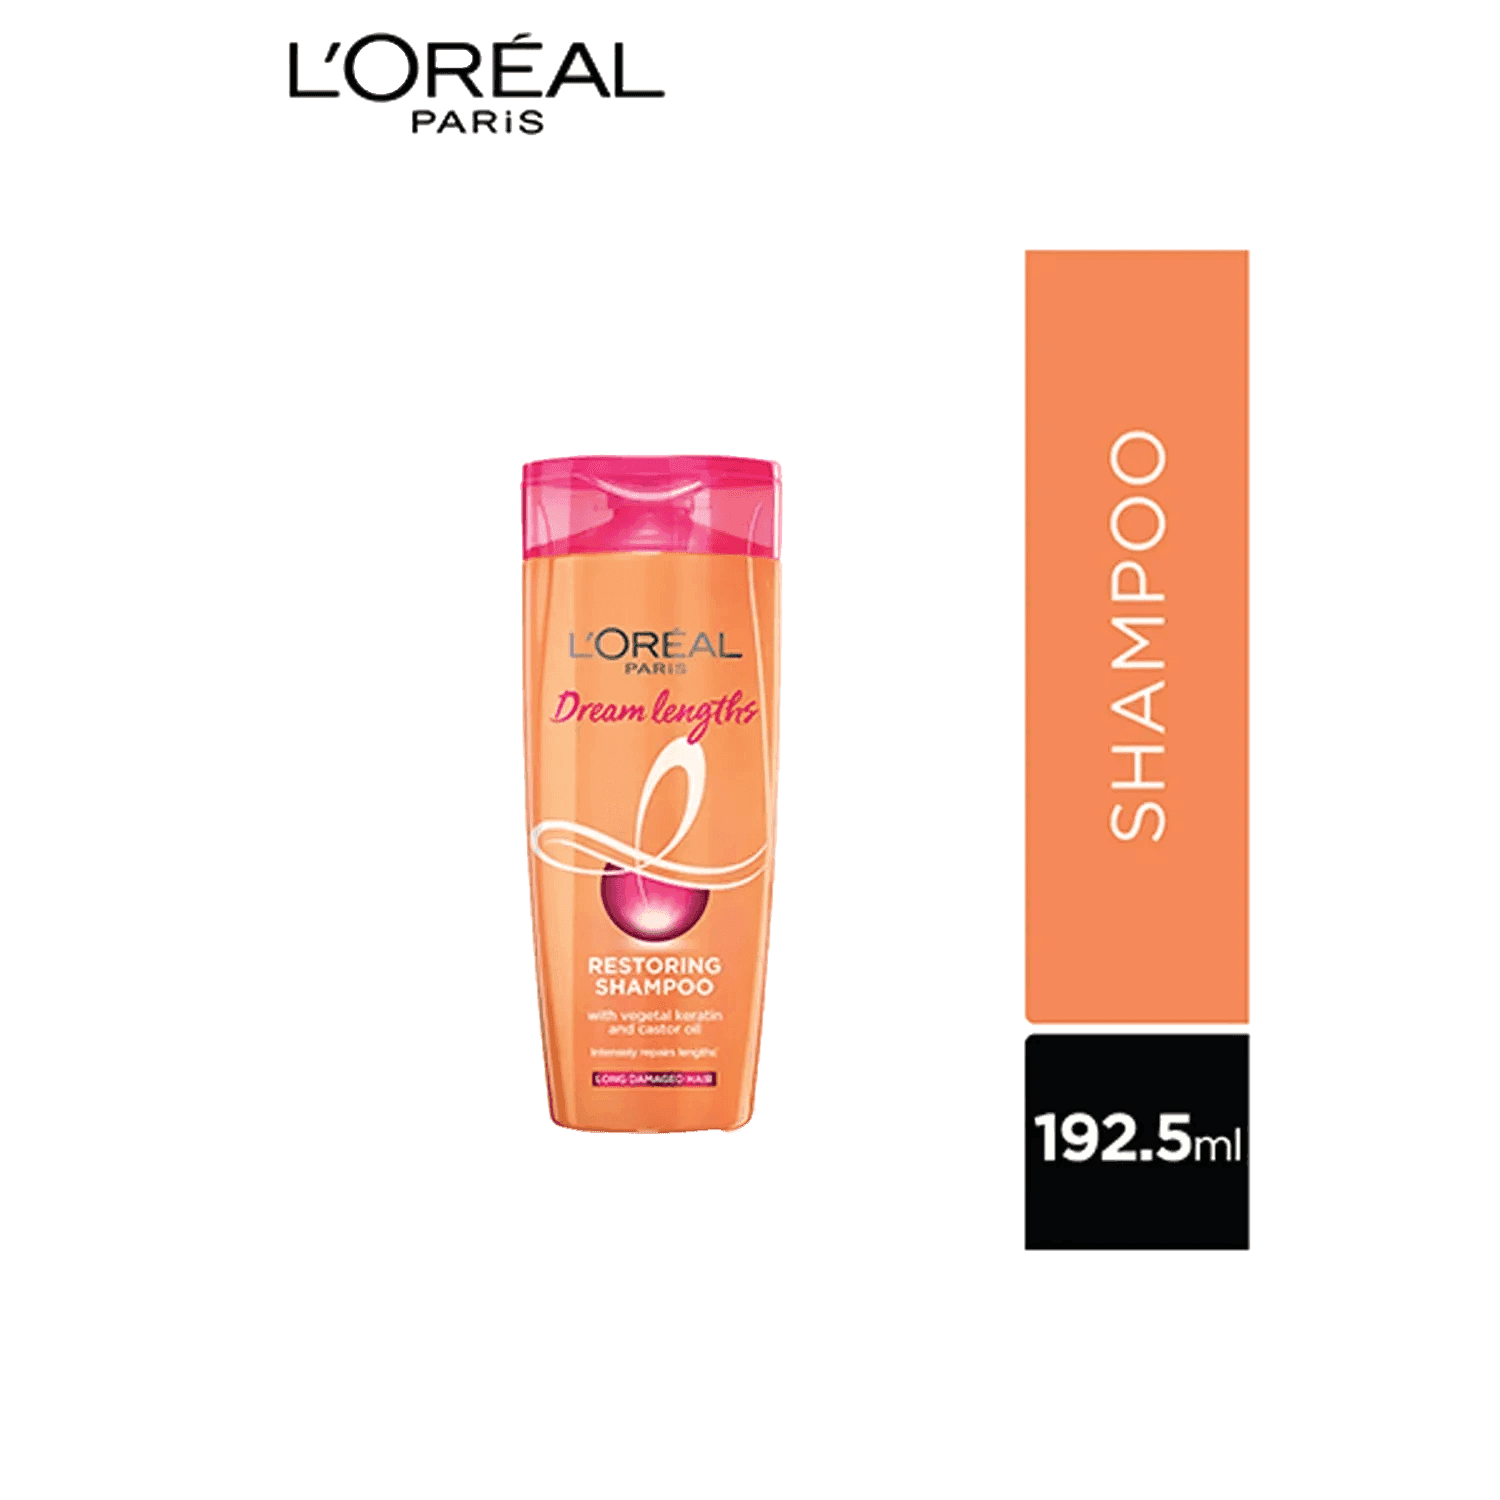 l'oreal-paris-dream-lengths-shampoo-192.5ml